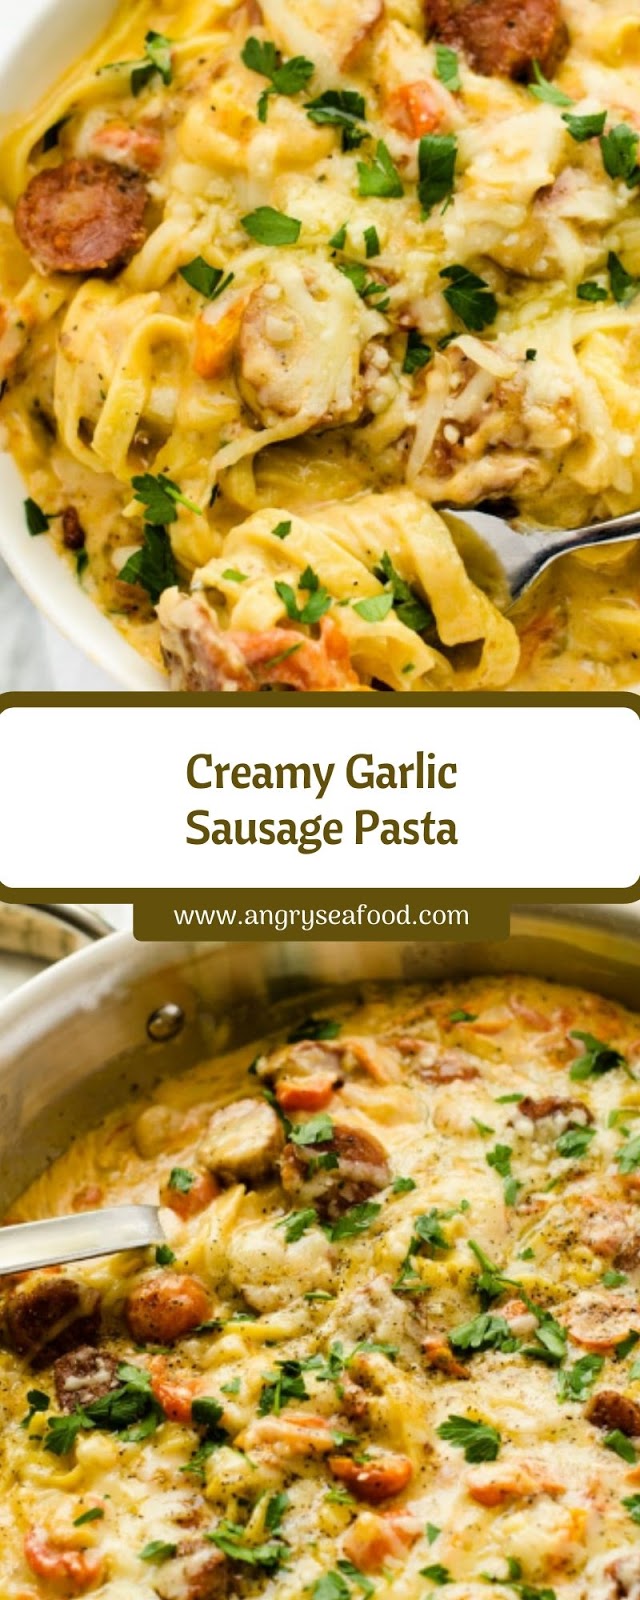 Creamy Garlic Sausage Pasta